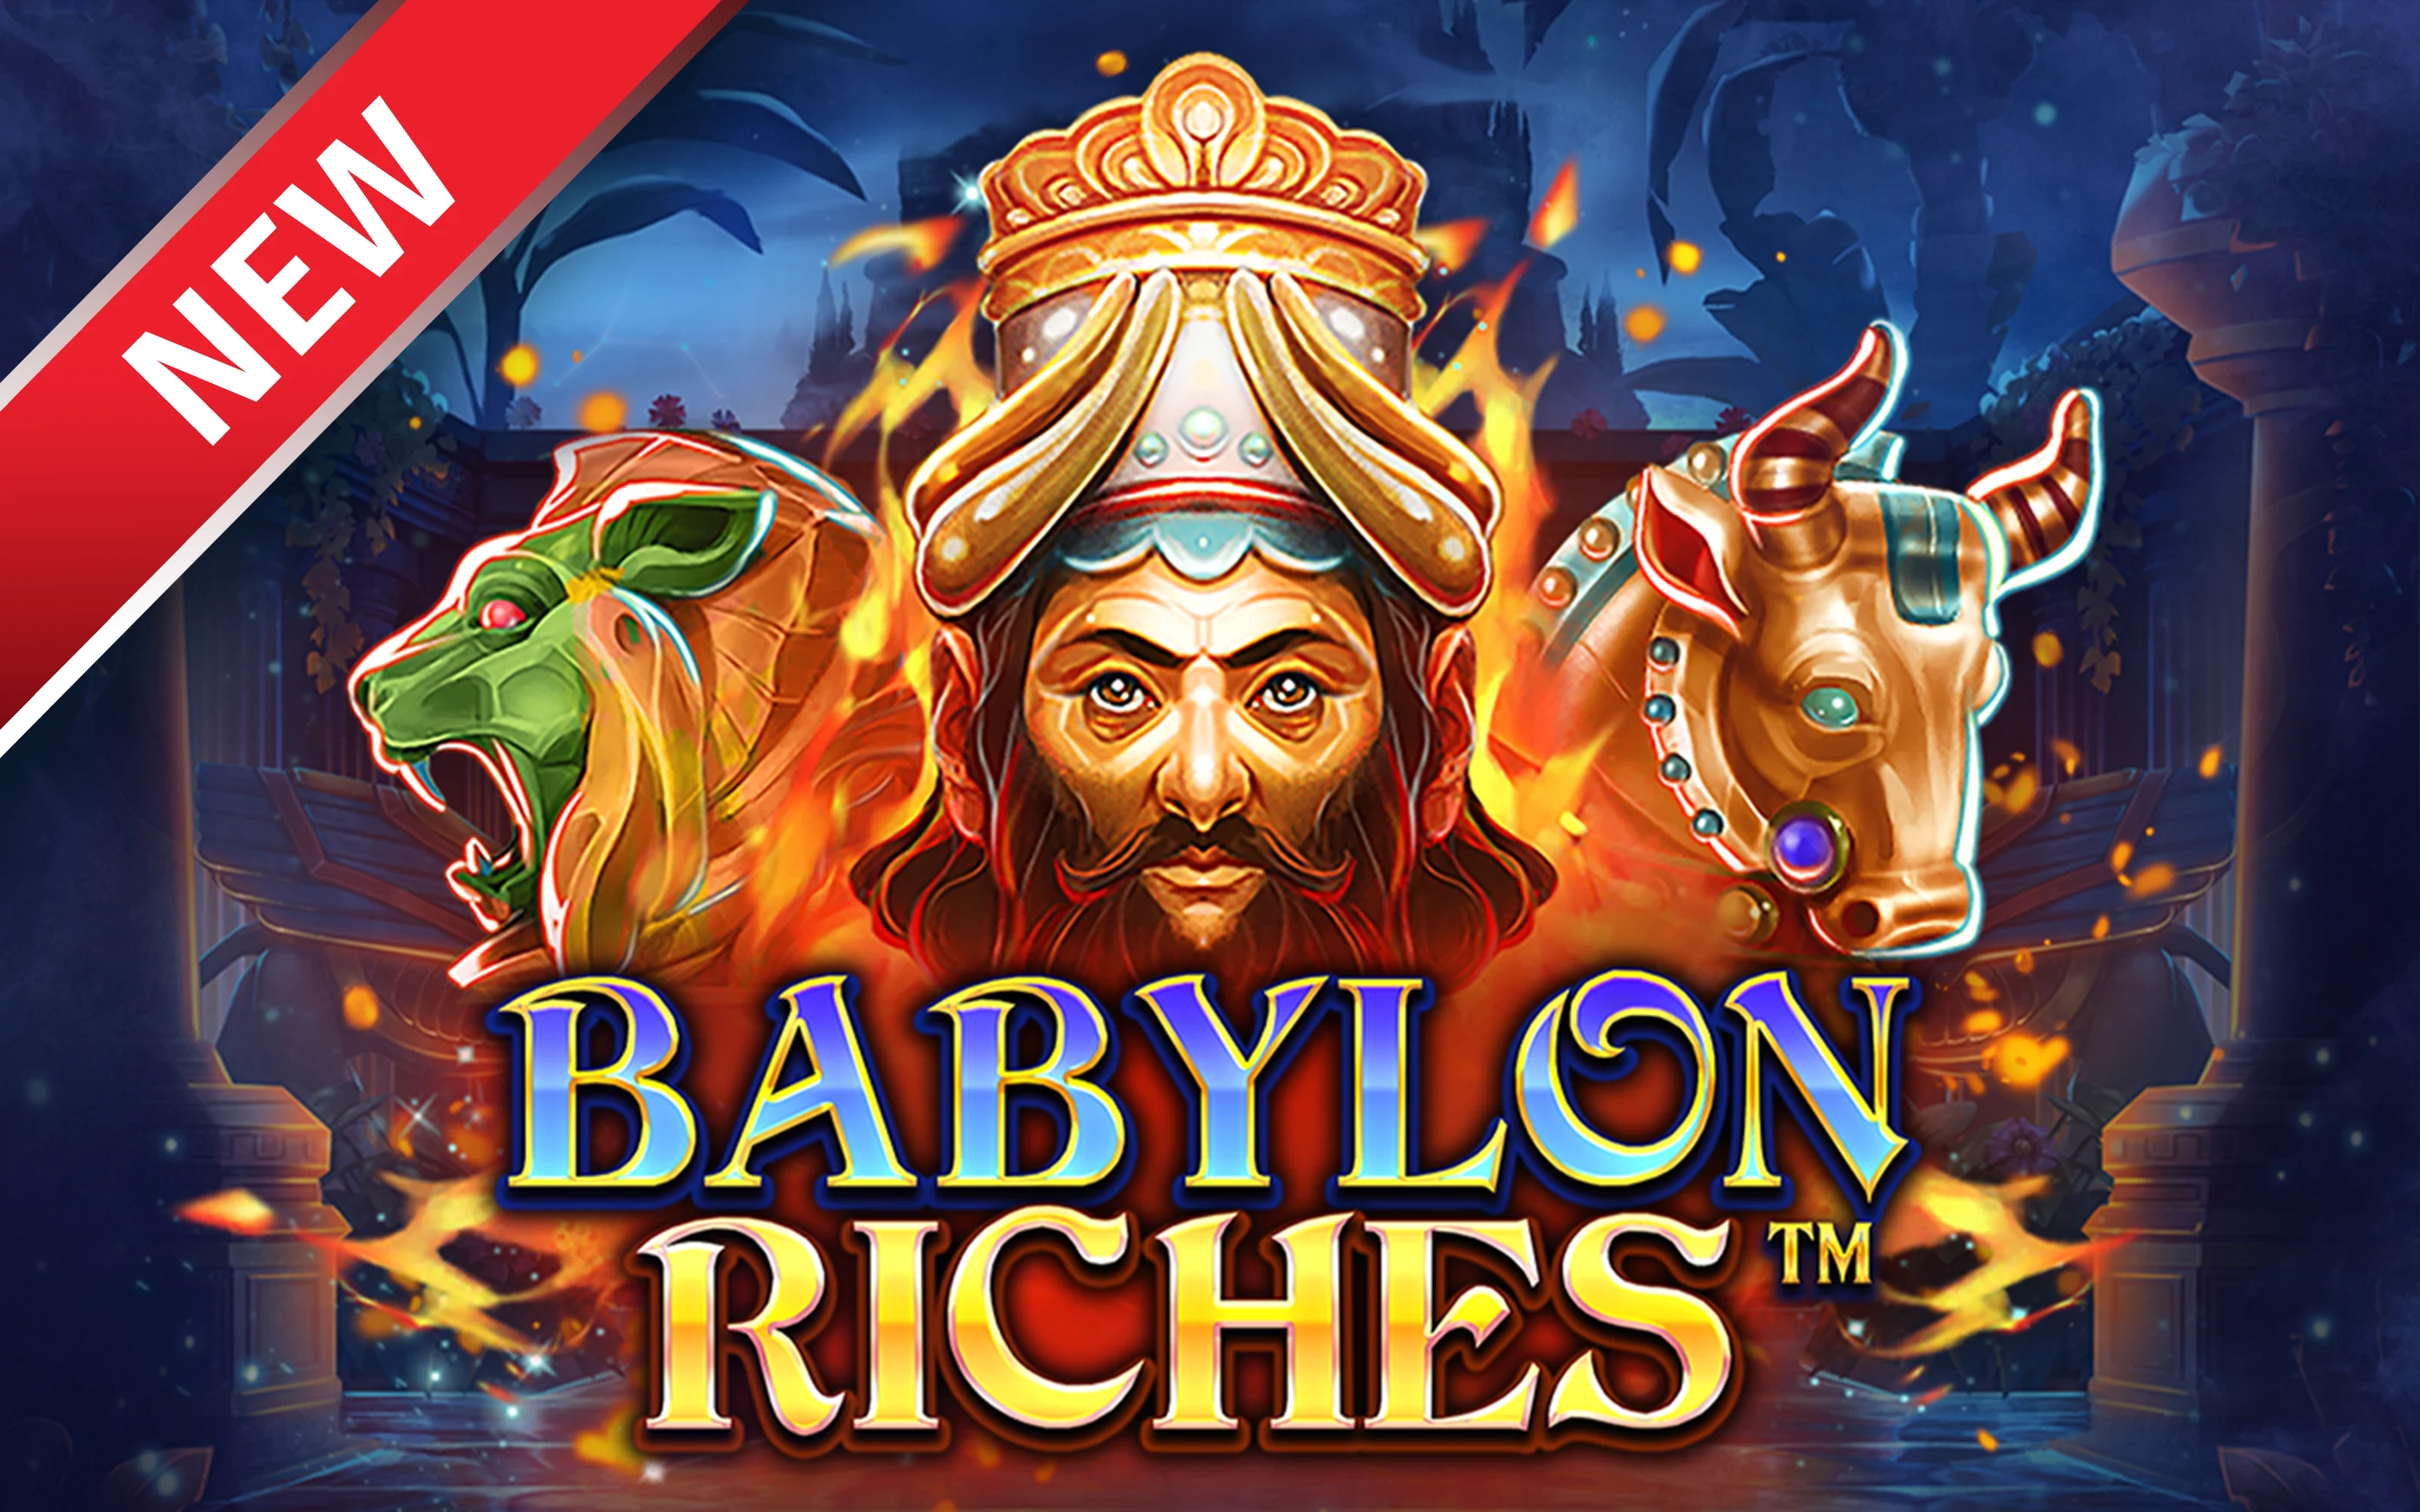 Play Babylon Riches™ on Starcasino.be online casino